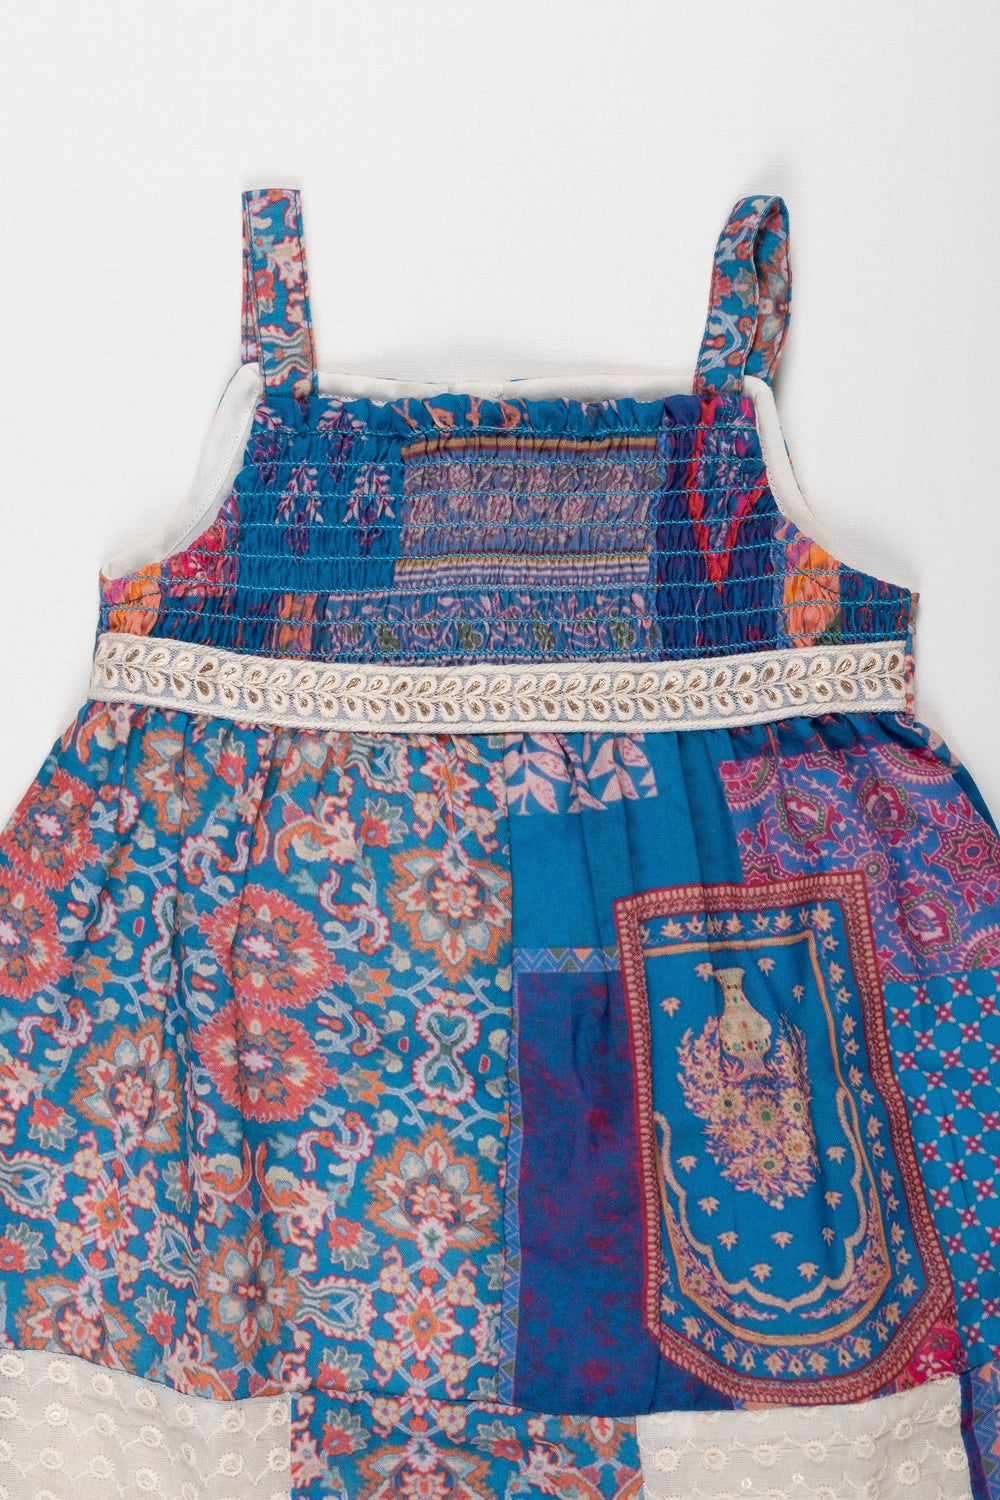 The Nesavu Baby Cotton Frocks Bohemian Chic Girls Patchwork Dress with Intricate Prints Nesavu Girls Boho Patchwork Dress | Vivid Patterns & Fringe Details for a Stylish Summer | The Nesavu